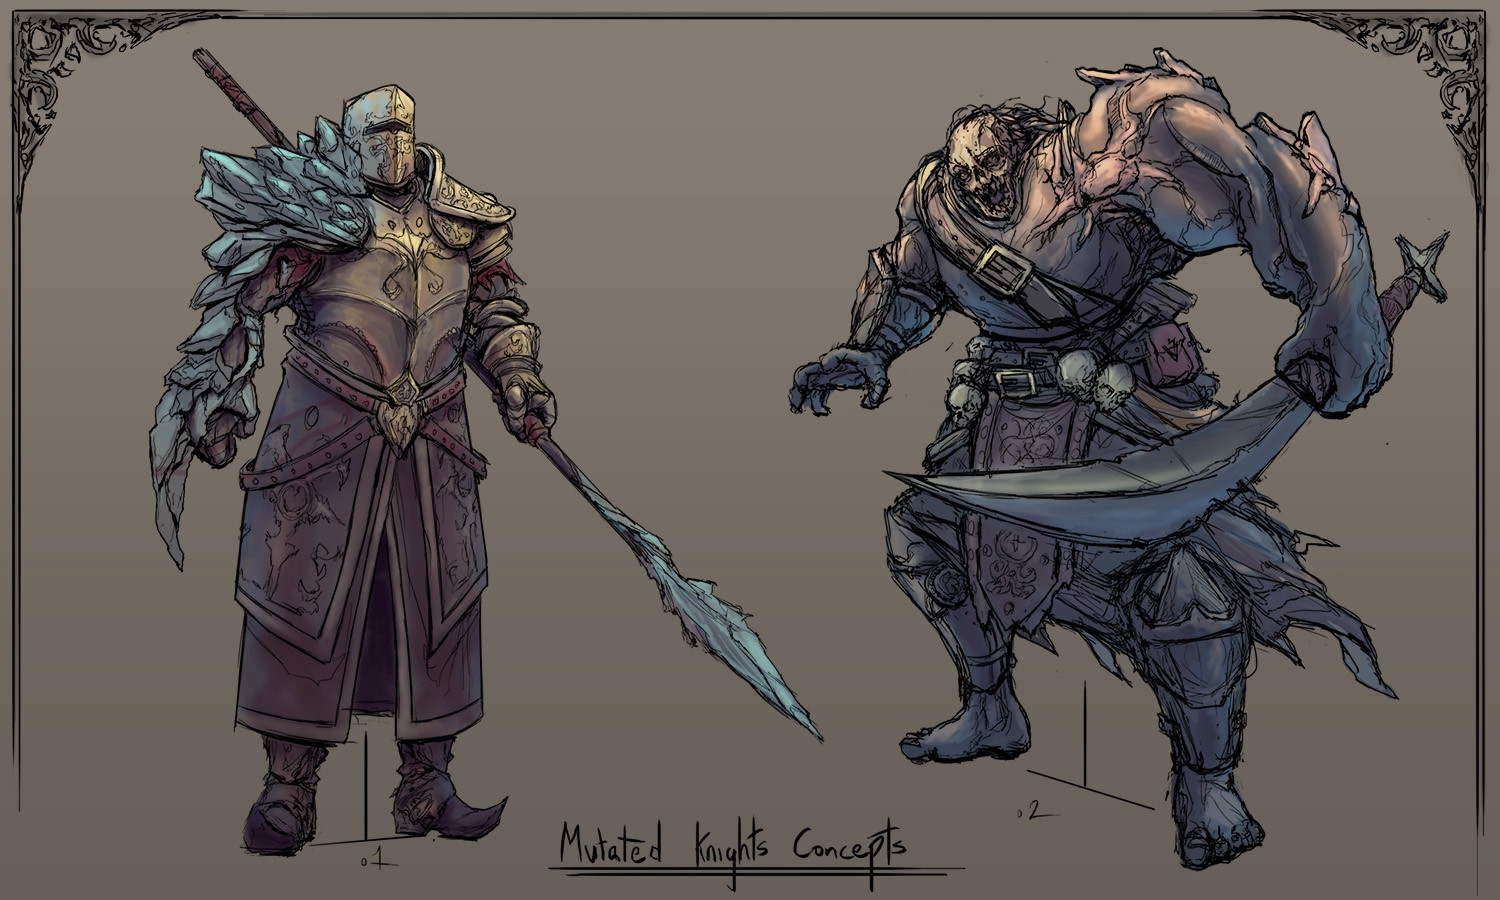 Mutated Knights